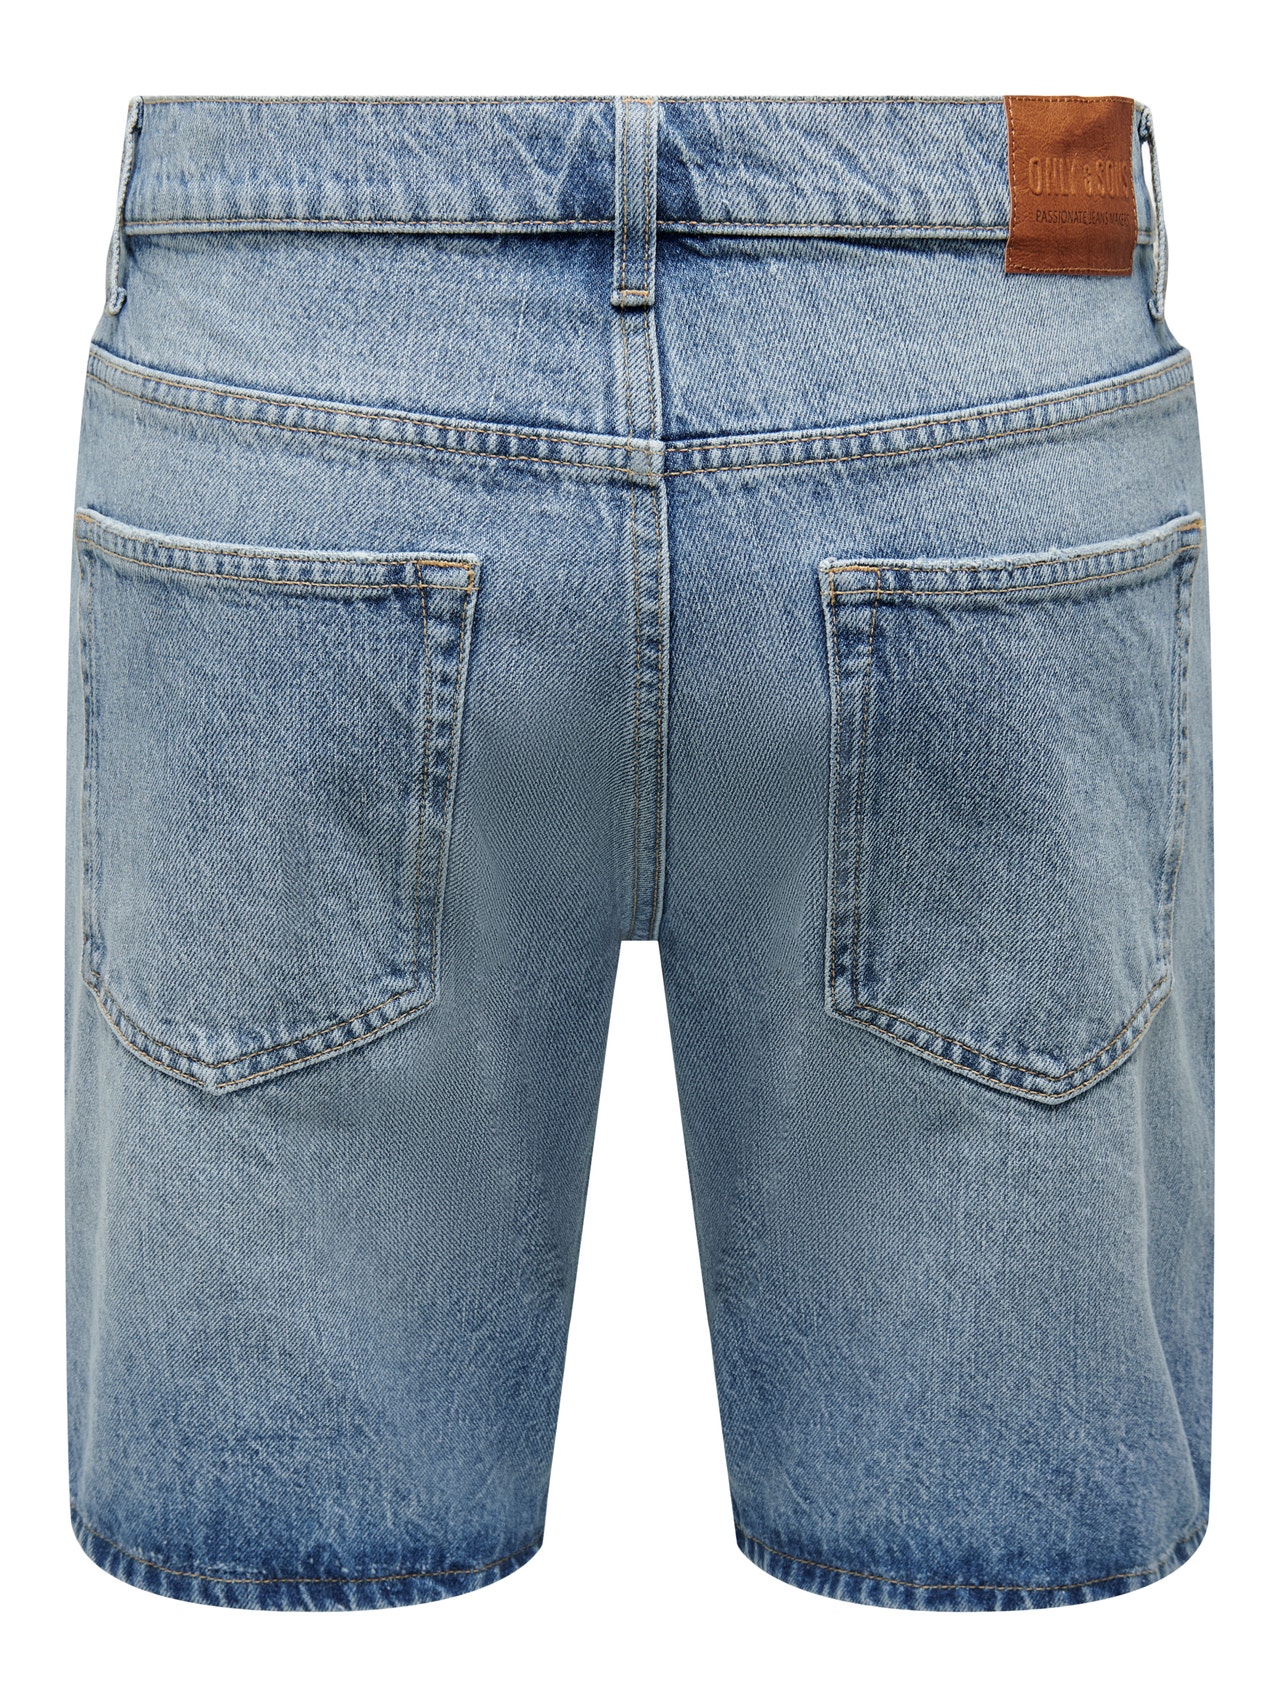 ONLY & SONS Straight fit Regular rise Shorts -Light Blue Denim - 22026092